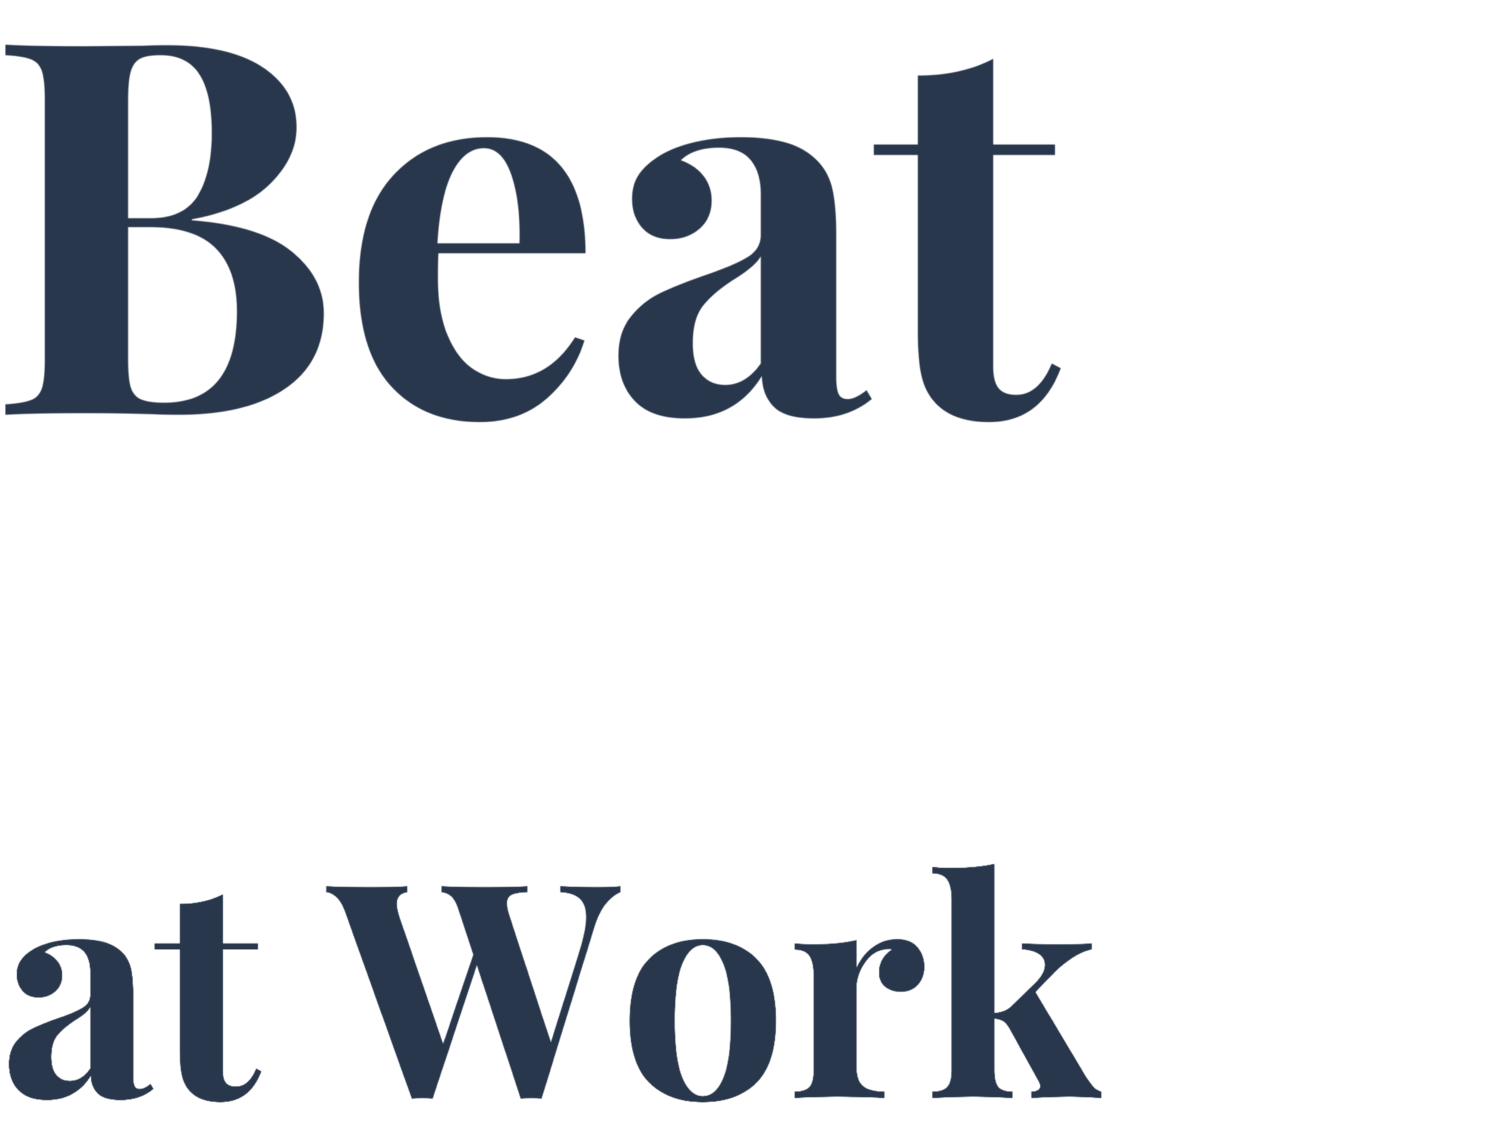 Beat Stress at Work